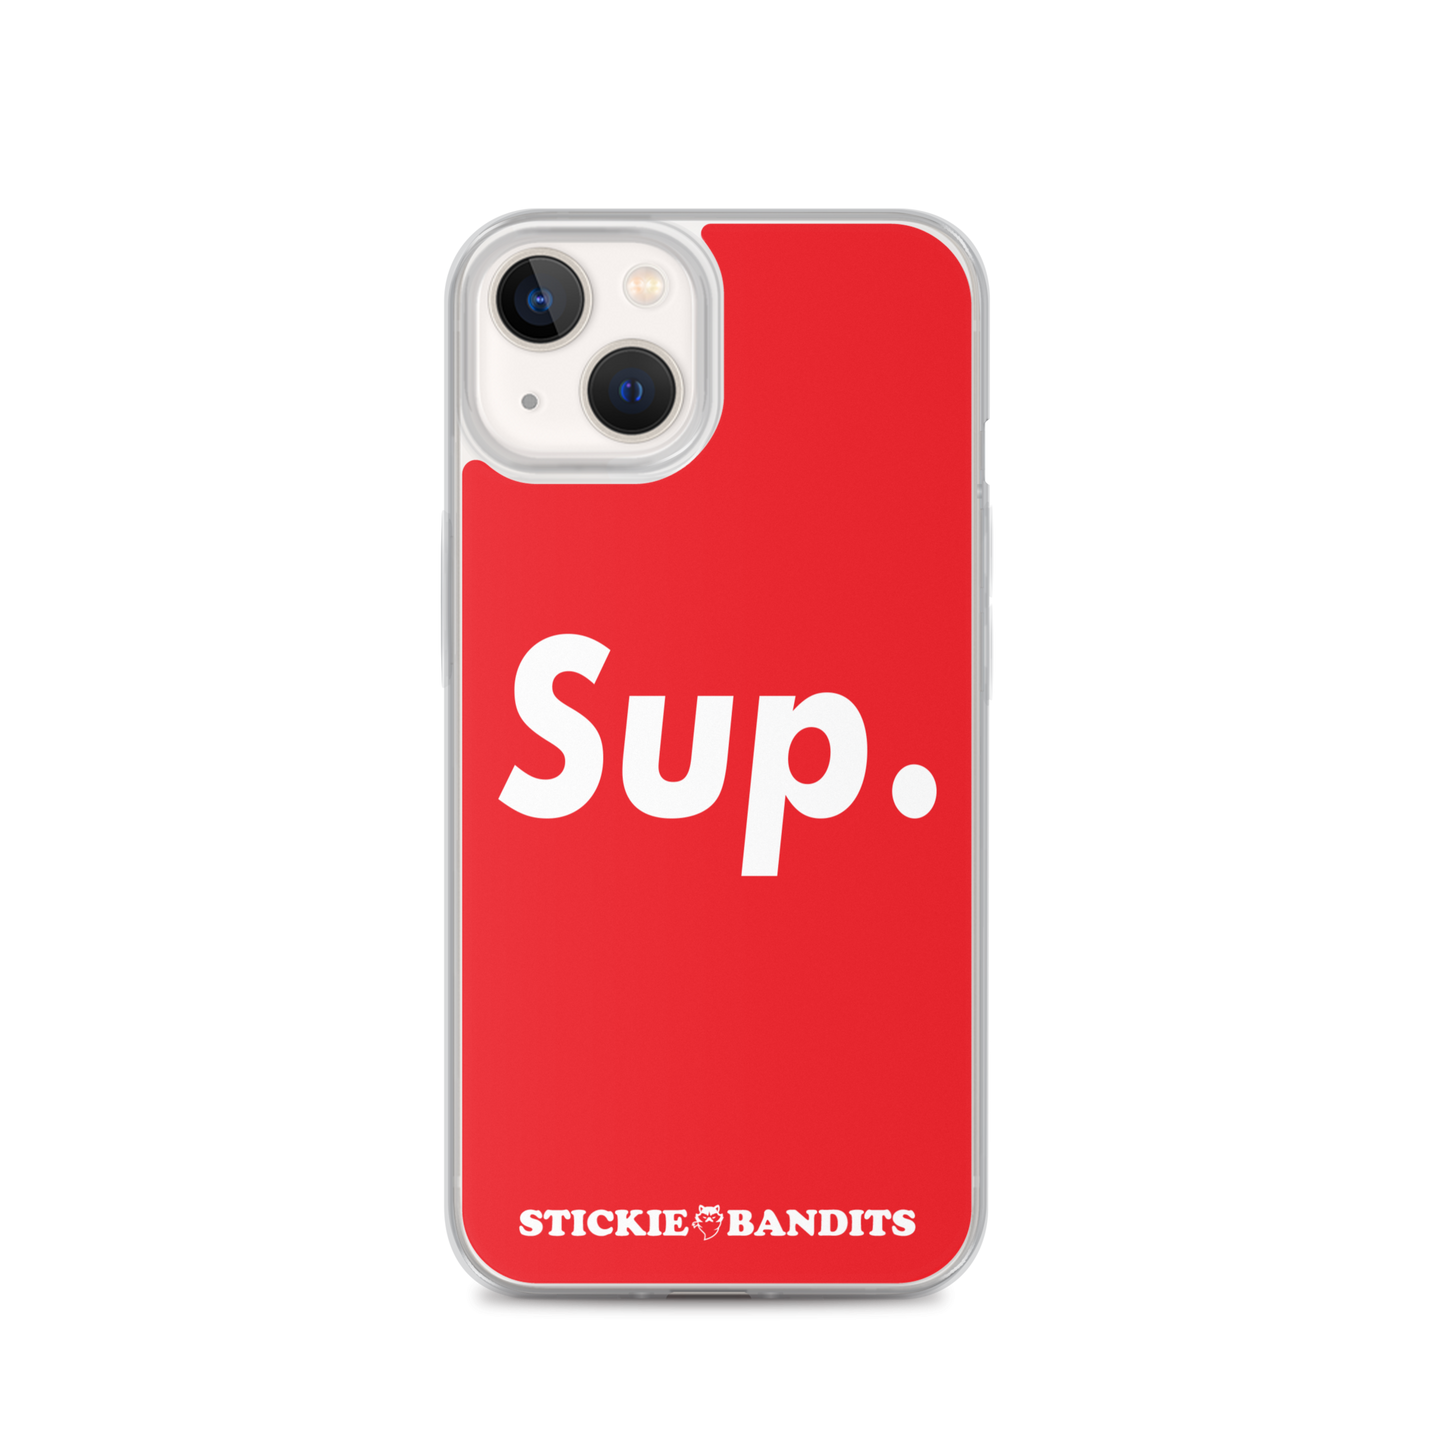 Sup. iPhone Case